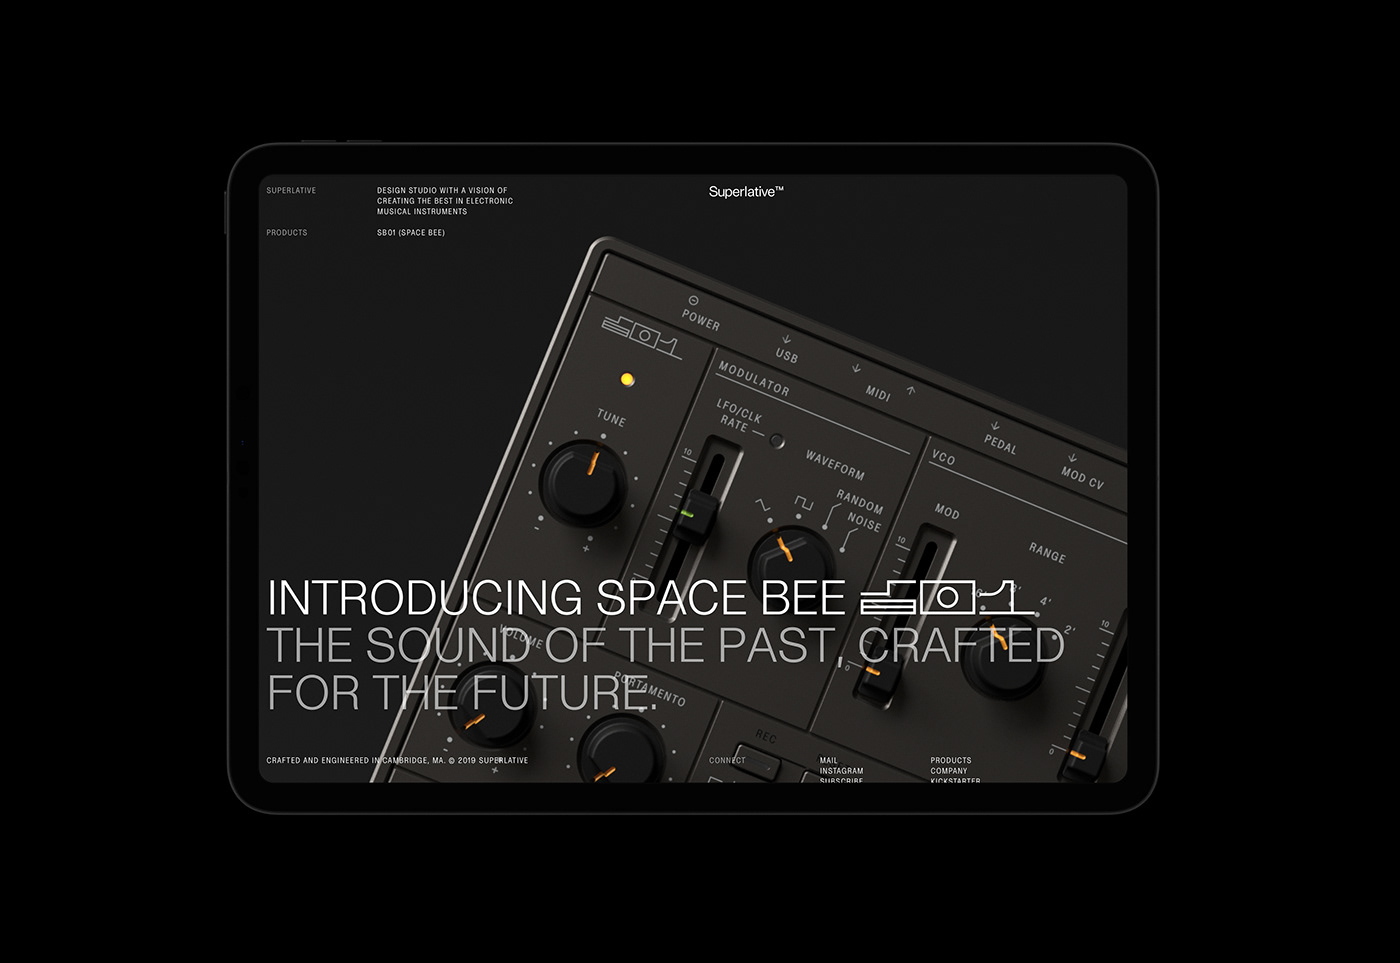 Superlative’s SB01 (Space Bee) — Visual Identity